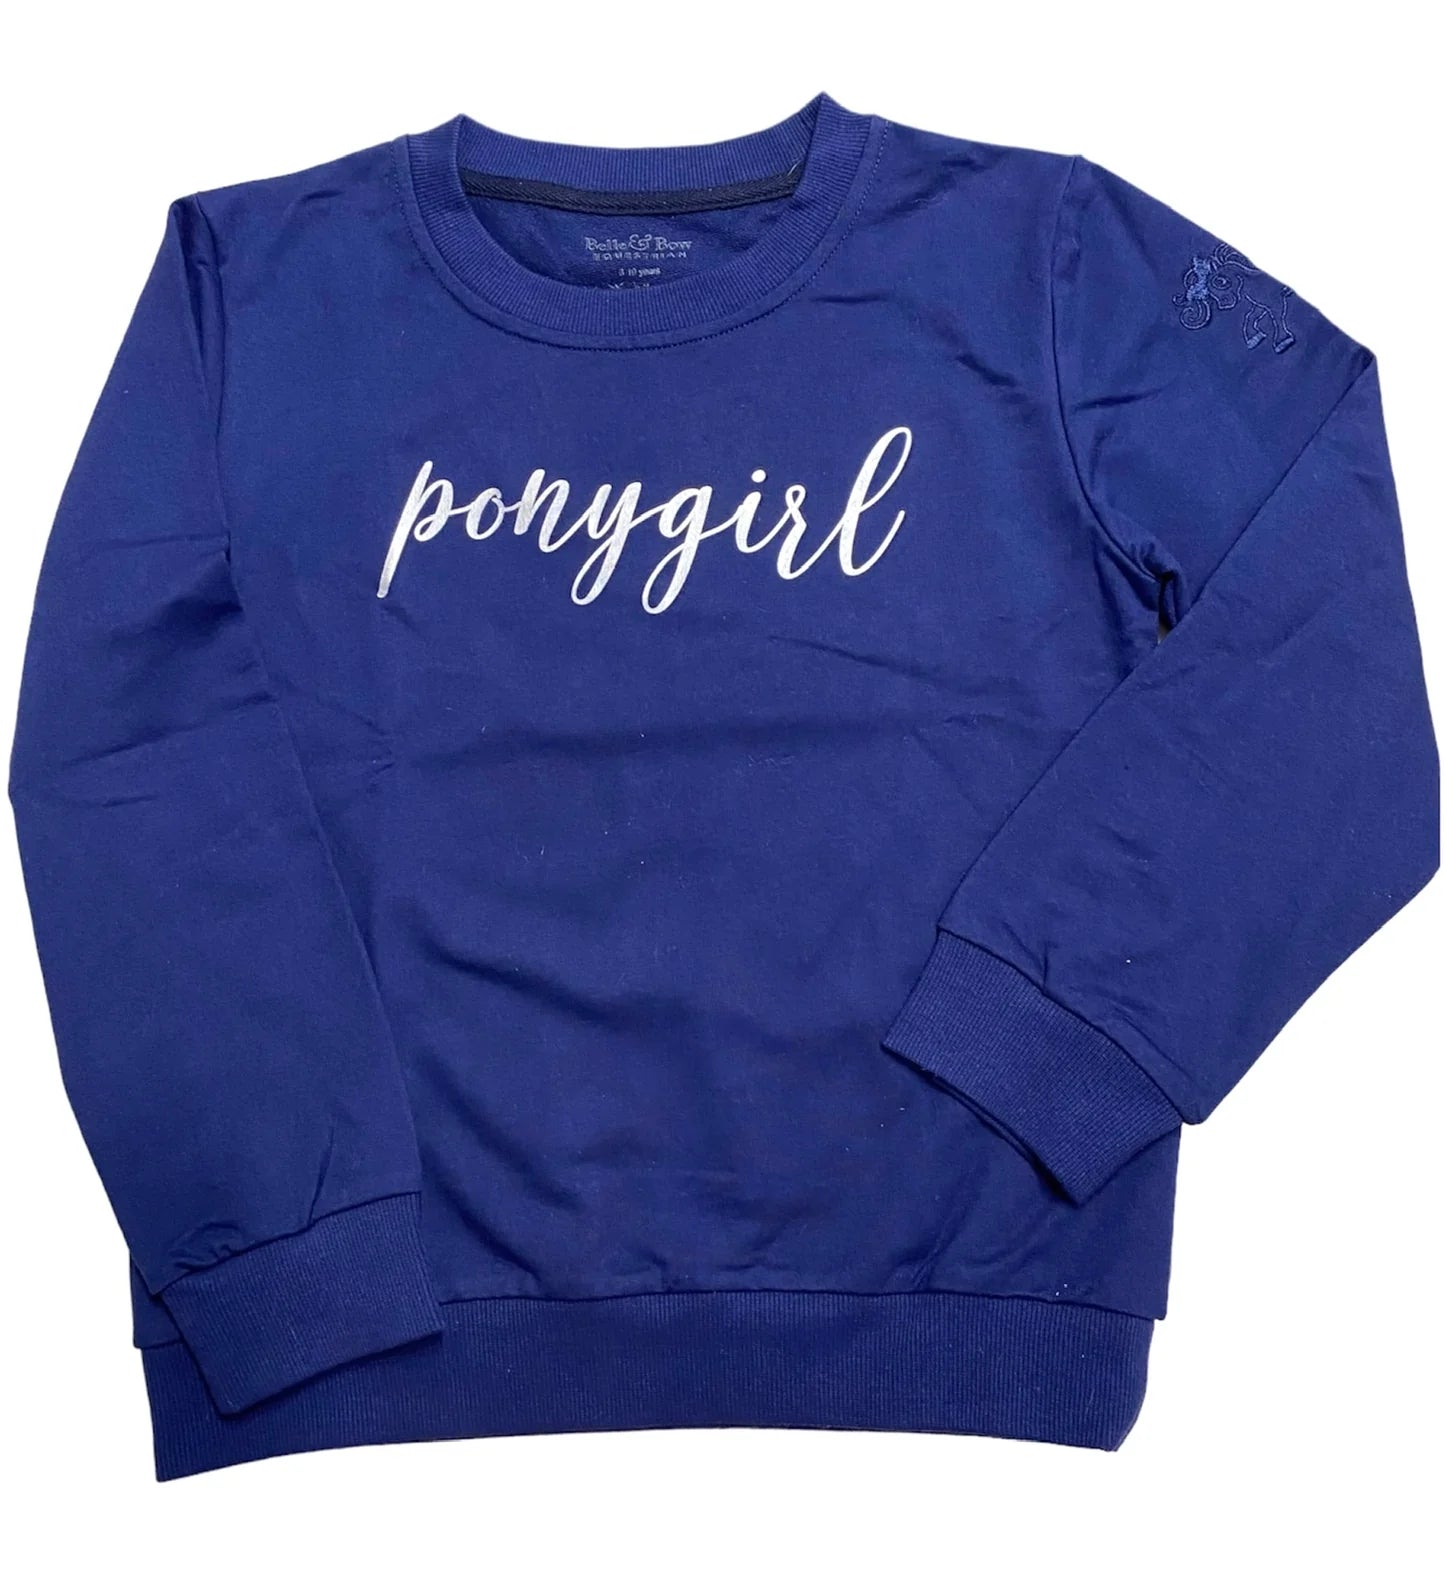 Belle & Bow Ponygirl Sweatshirt